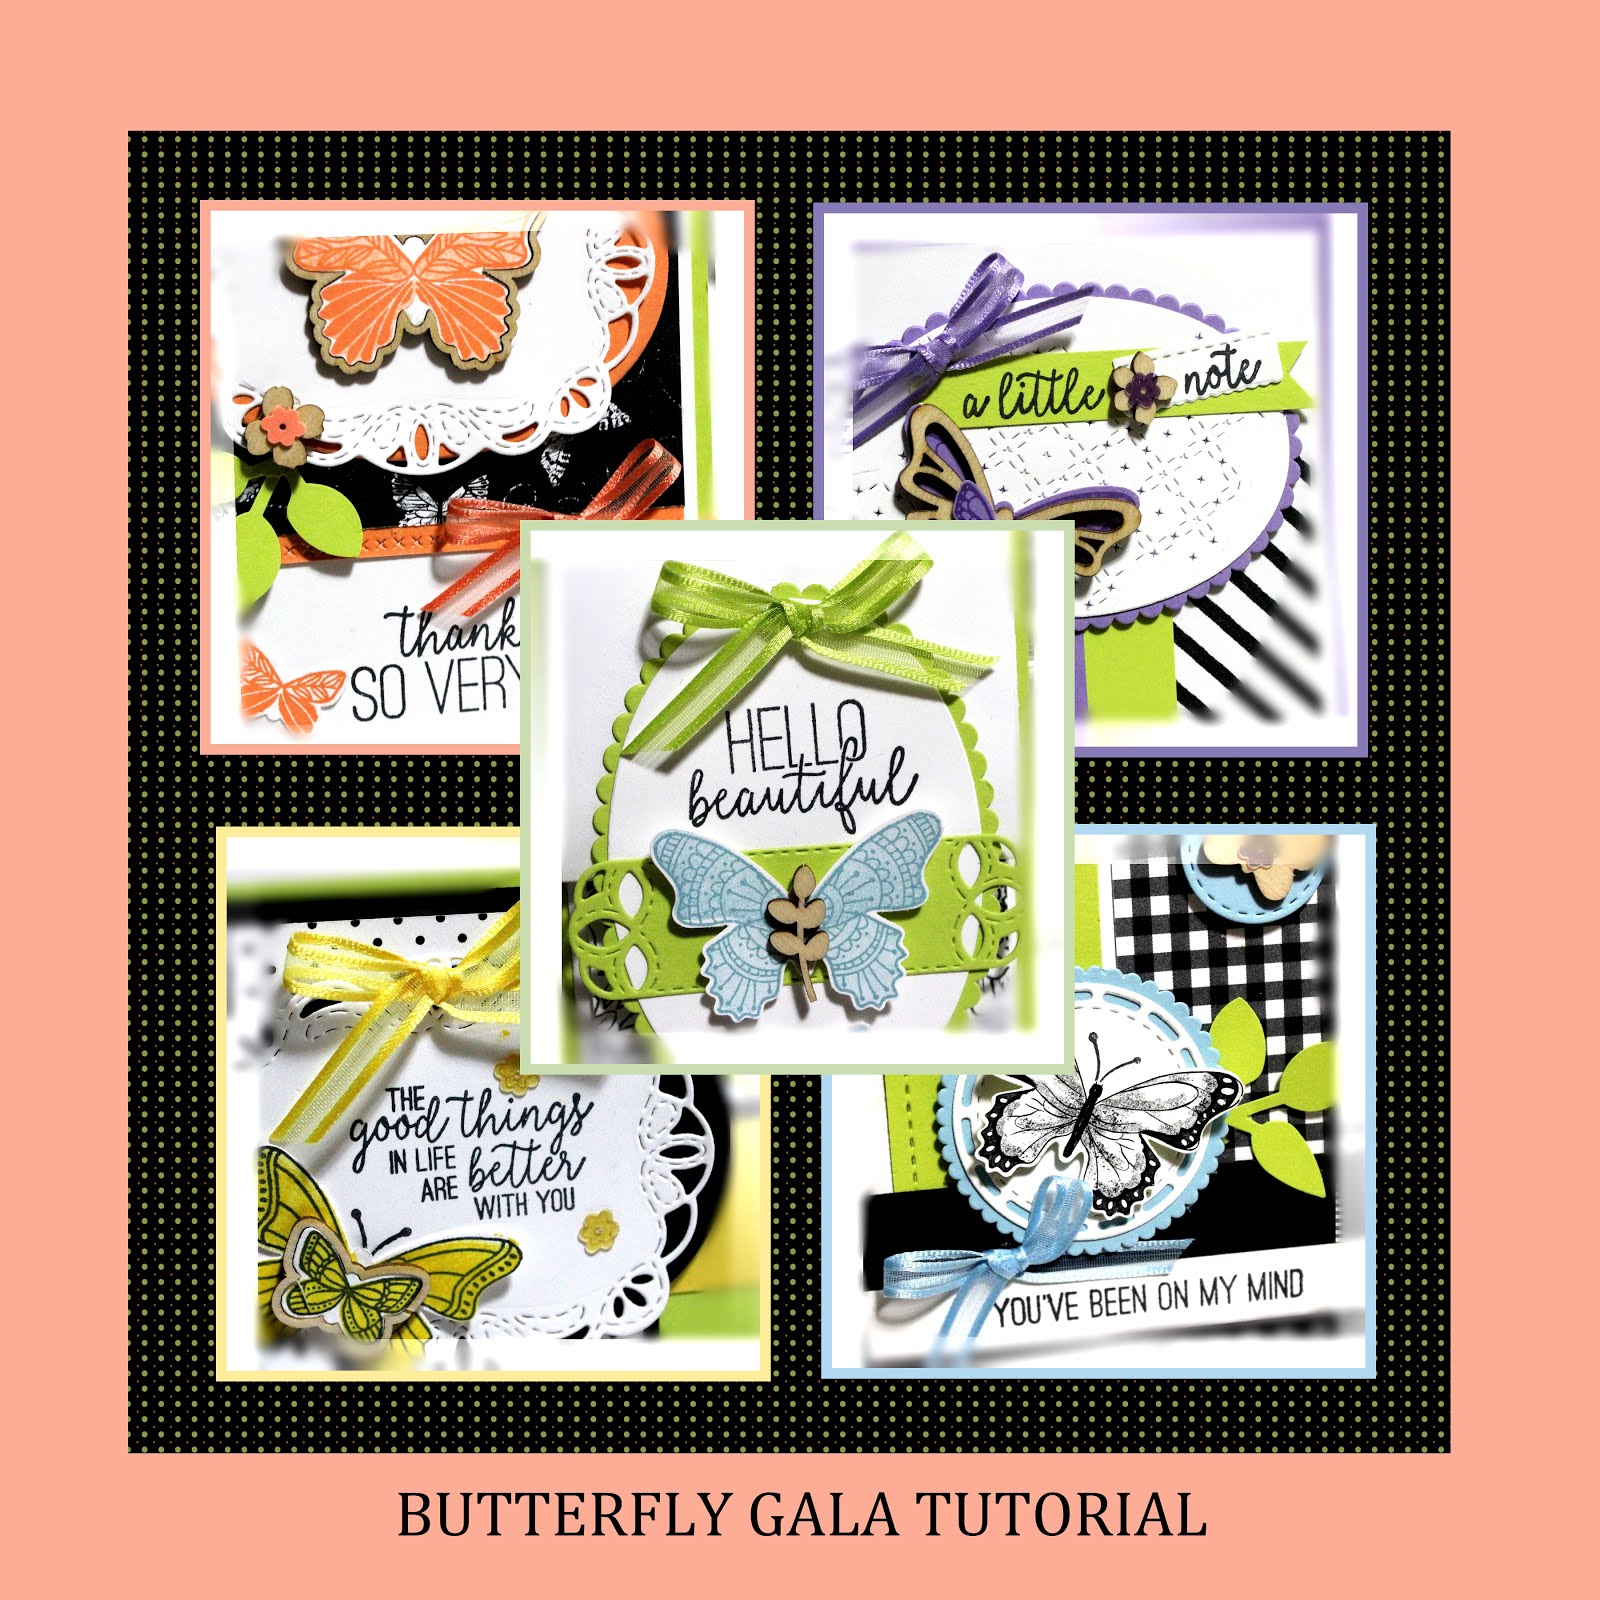 February 2019 Butterfly Gala Tutorial